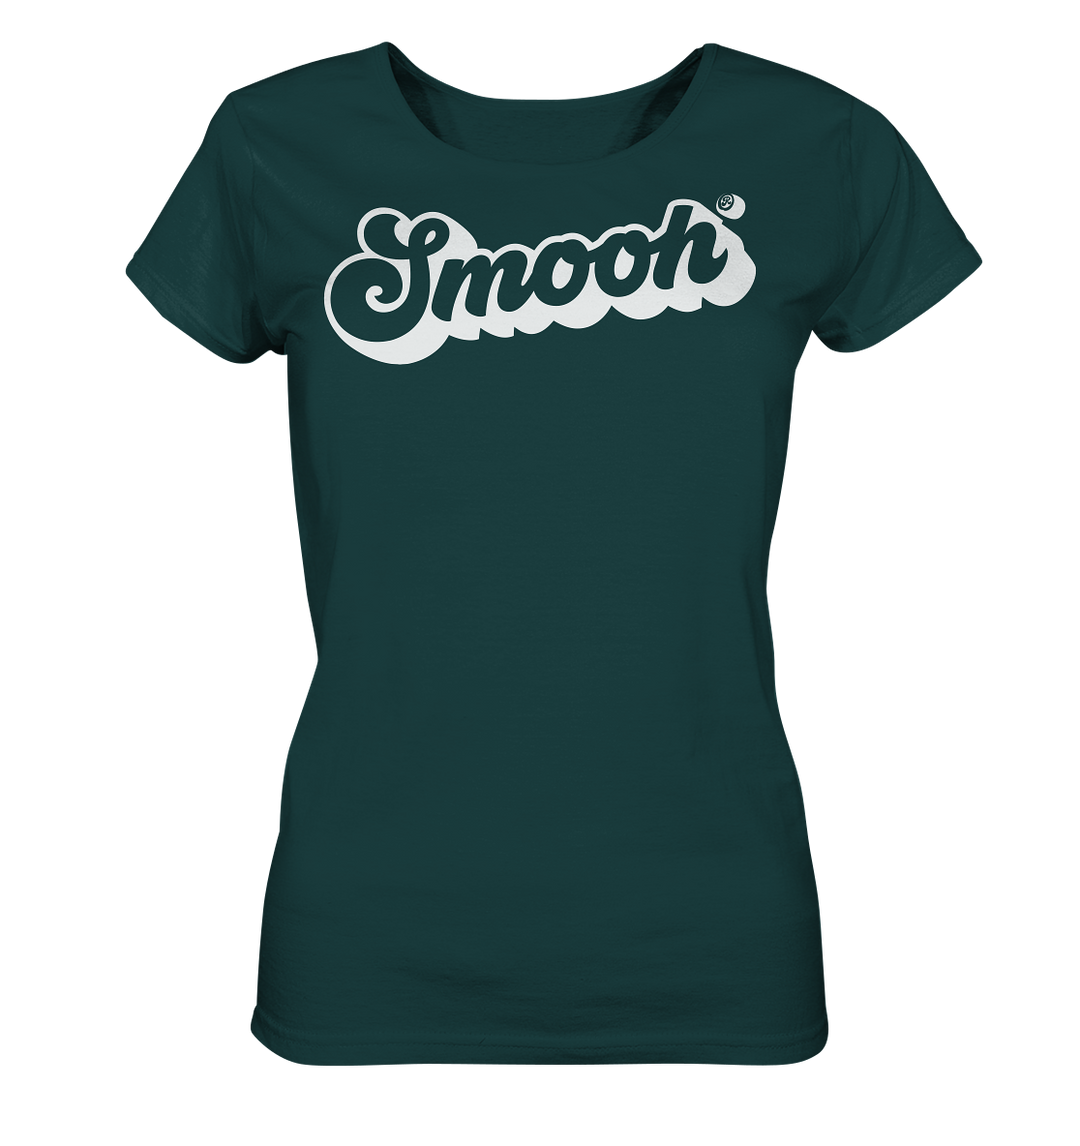 Smooh Merch - Ladies Organic Shirt